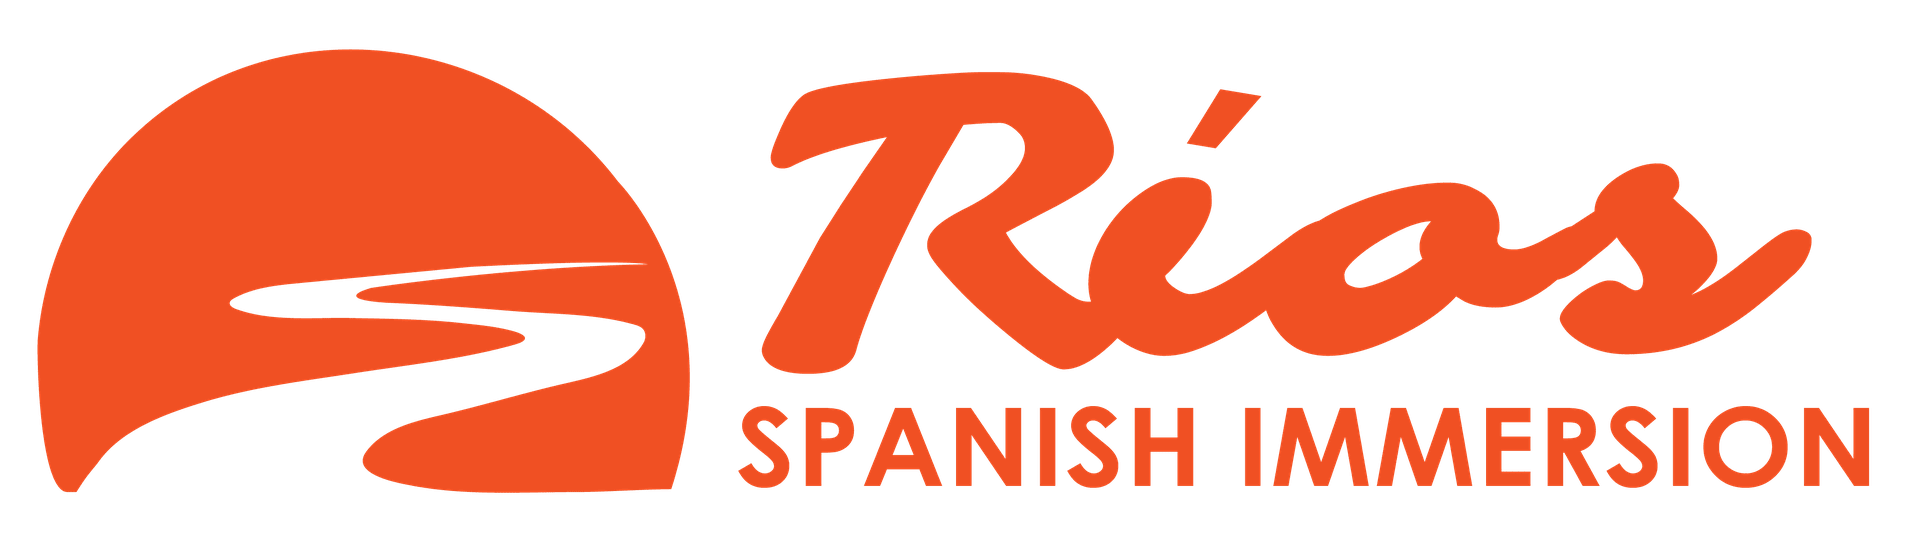 Rios Spanish Immersion